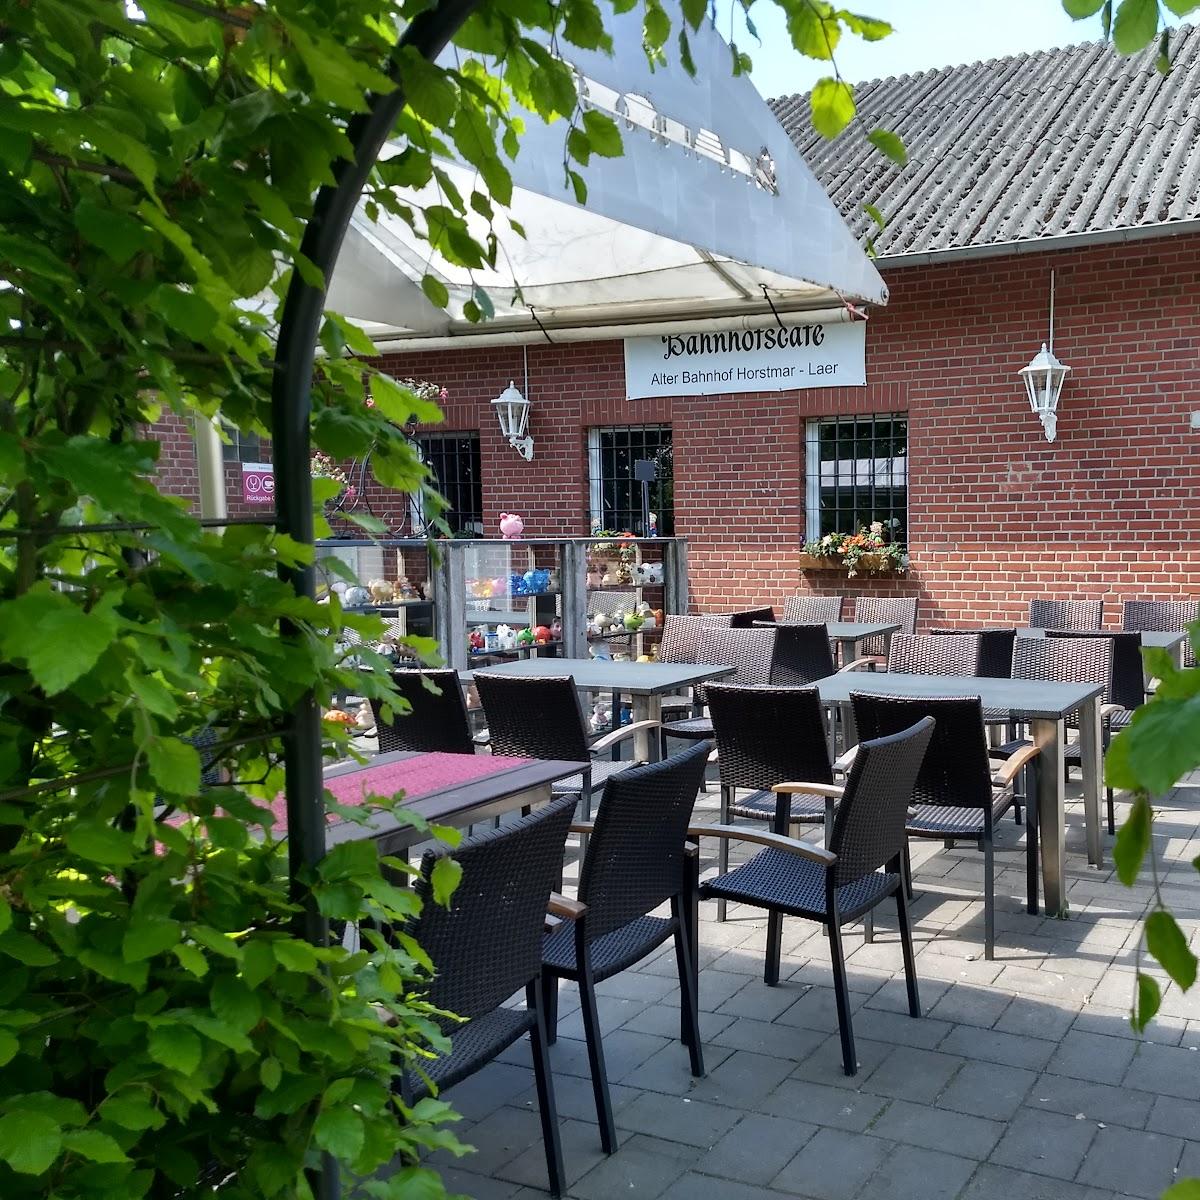 Restaurant "Bahnhofscafe -Laer" in Horstmar